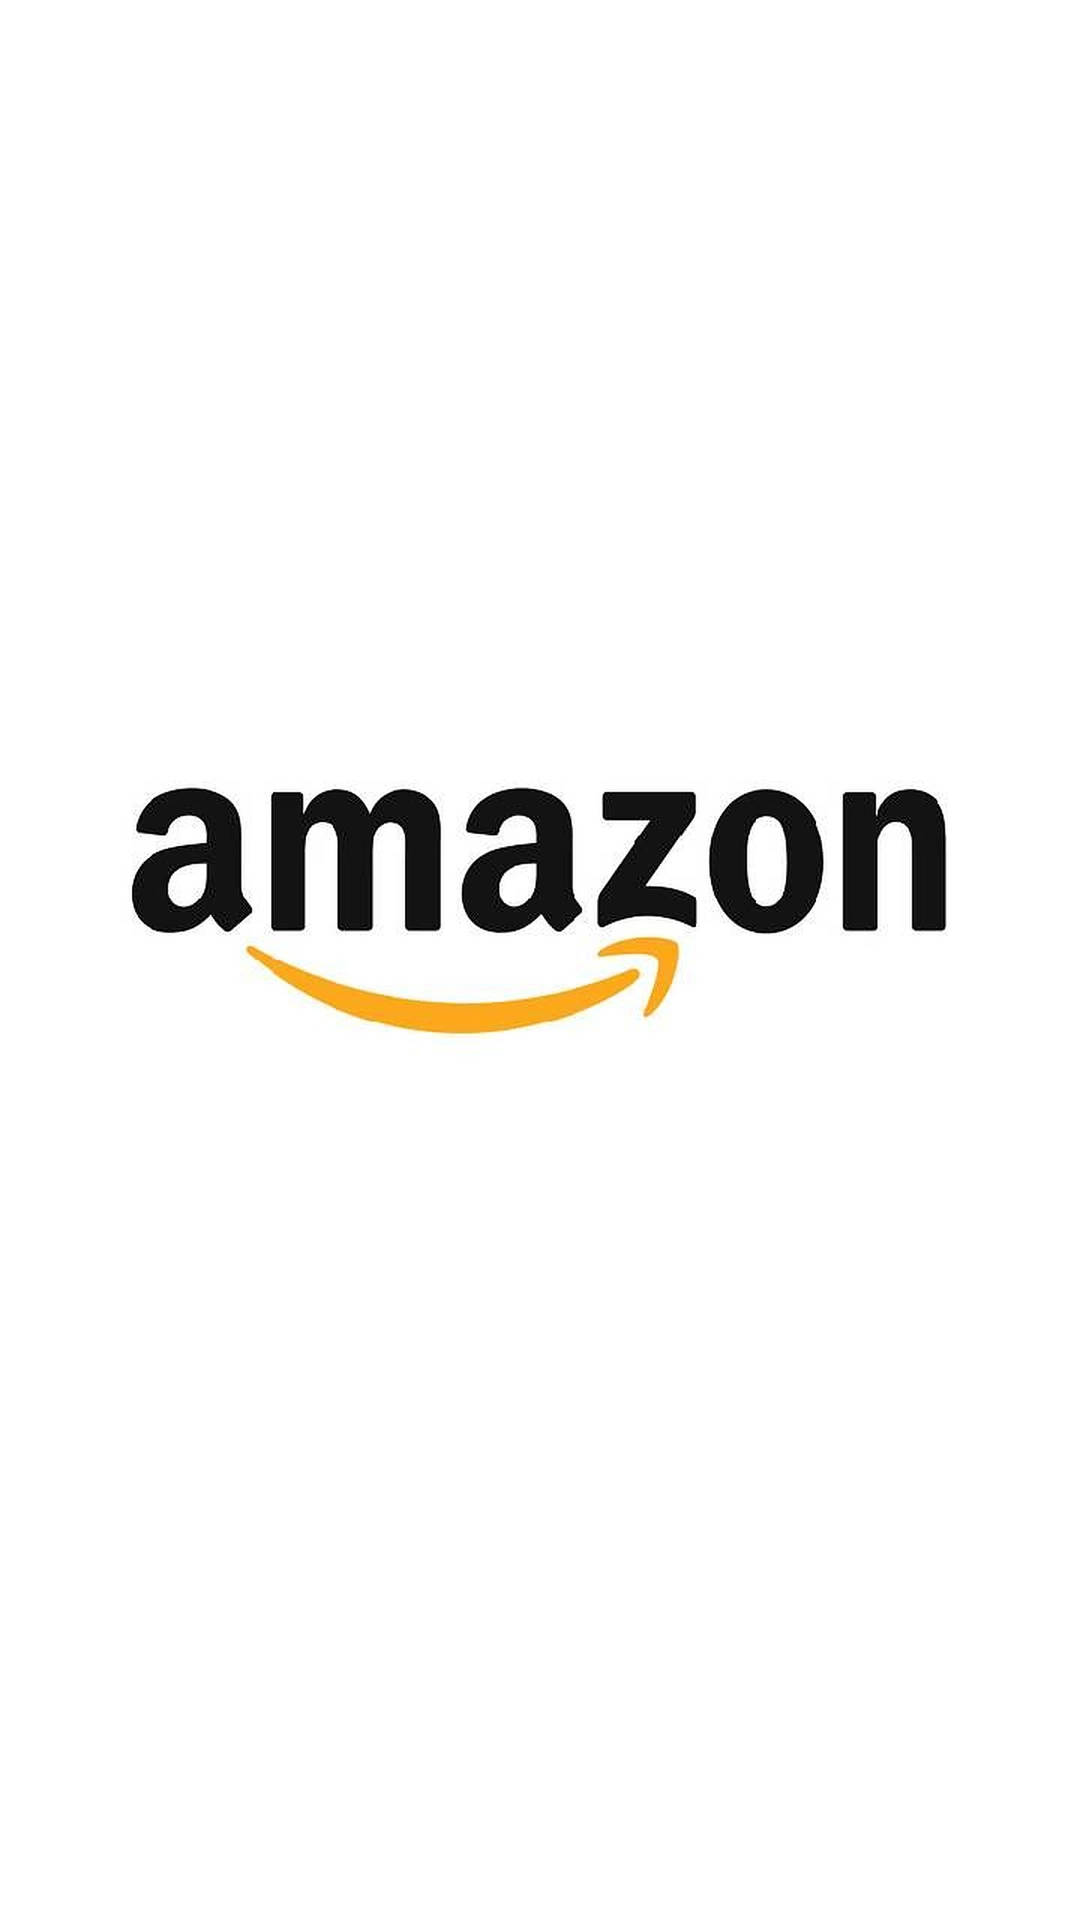 Amazon Online Shopping Site Background